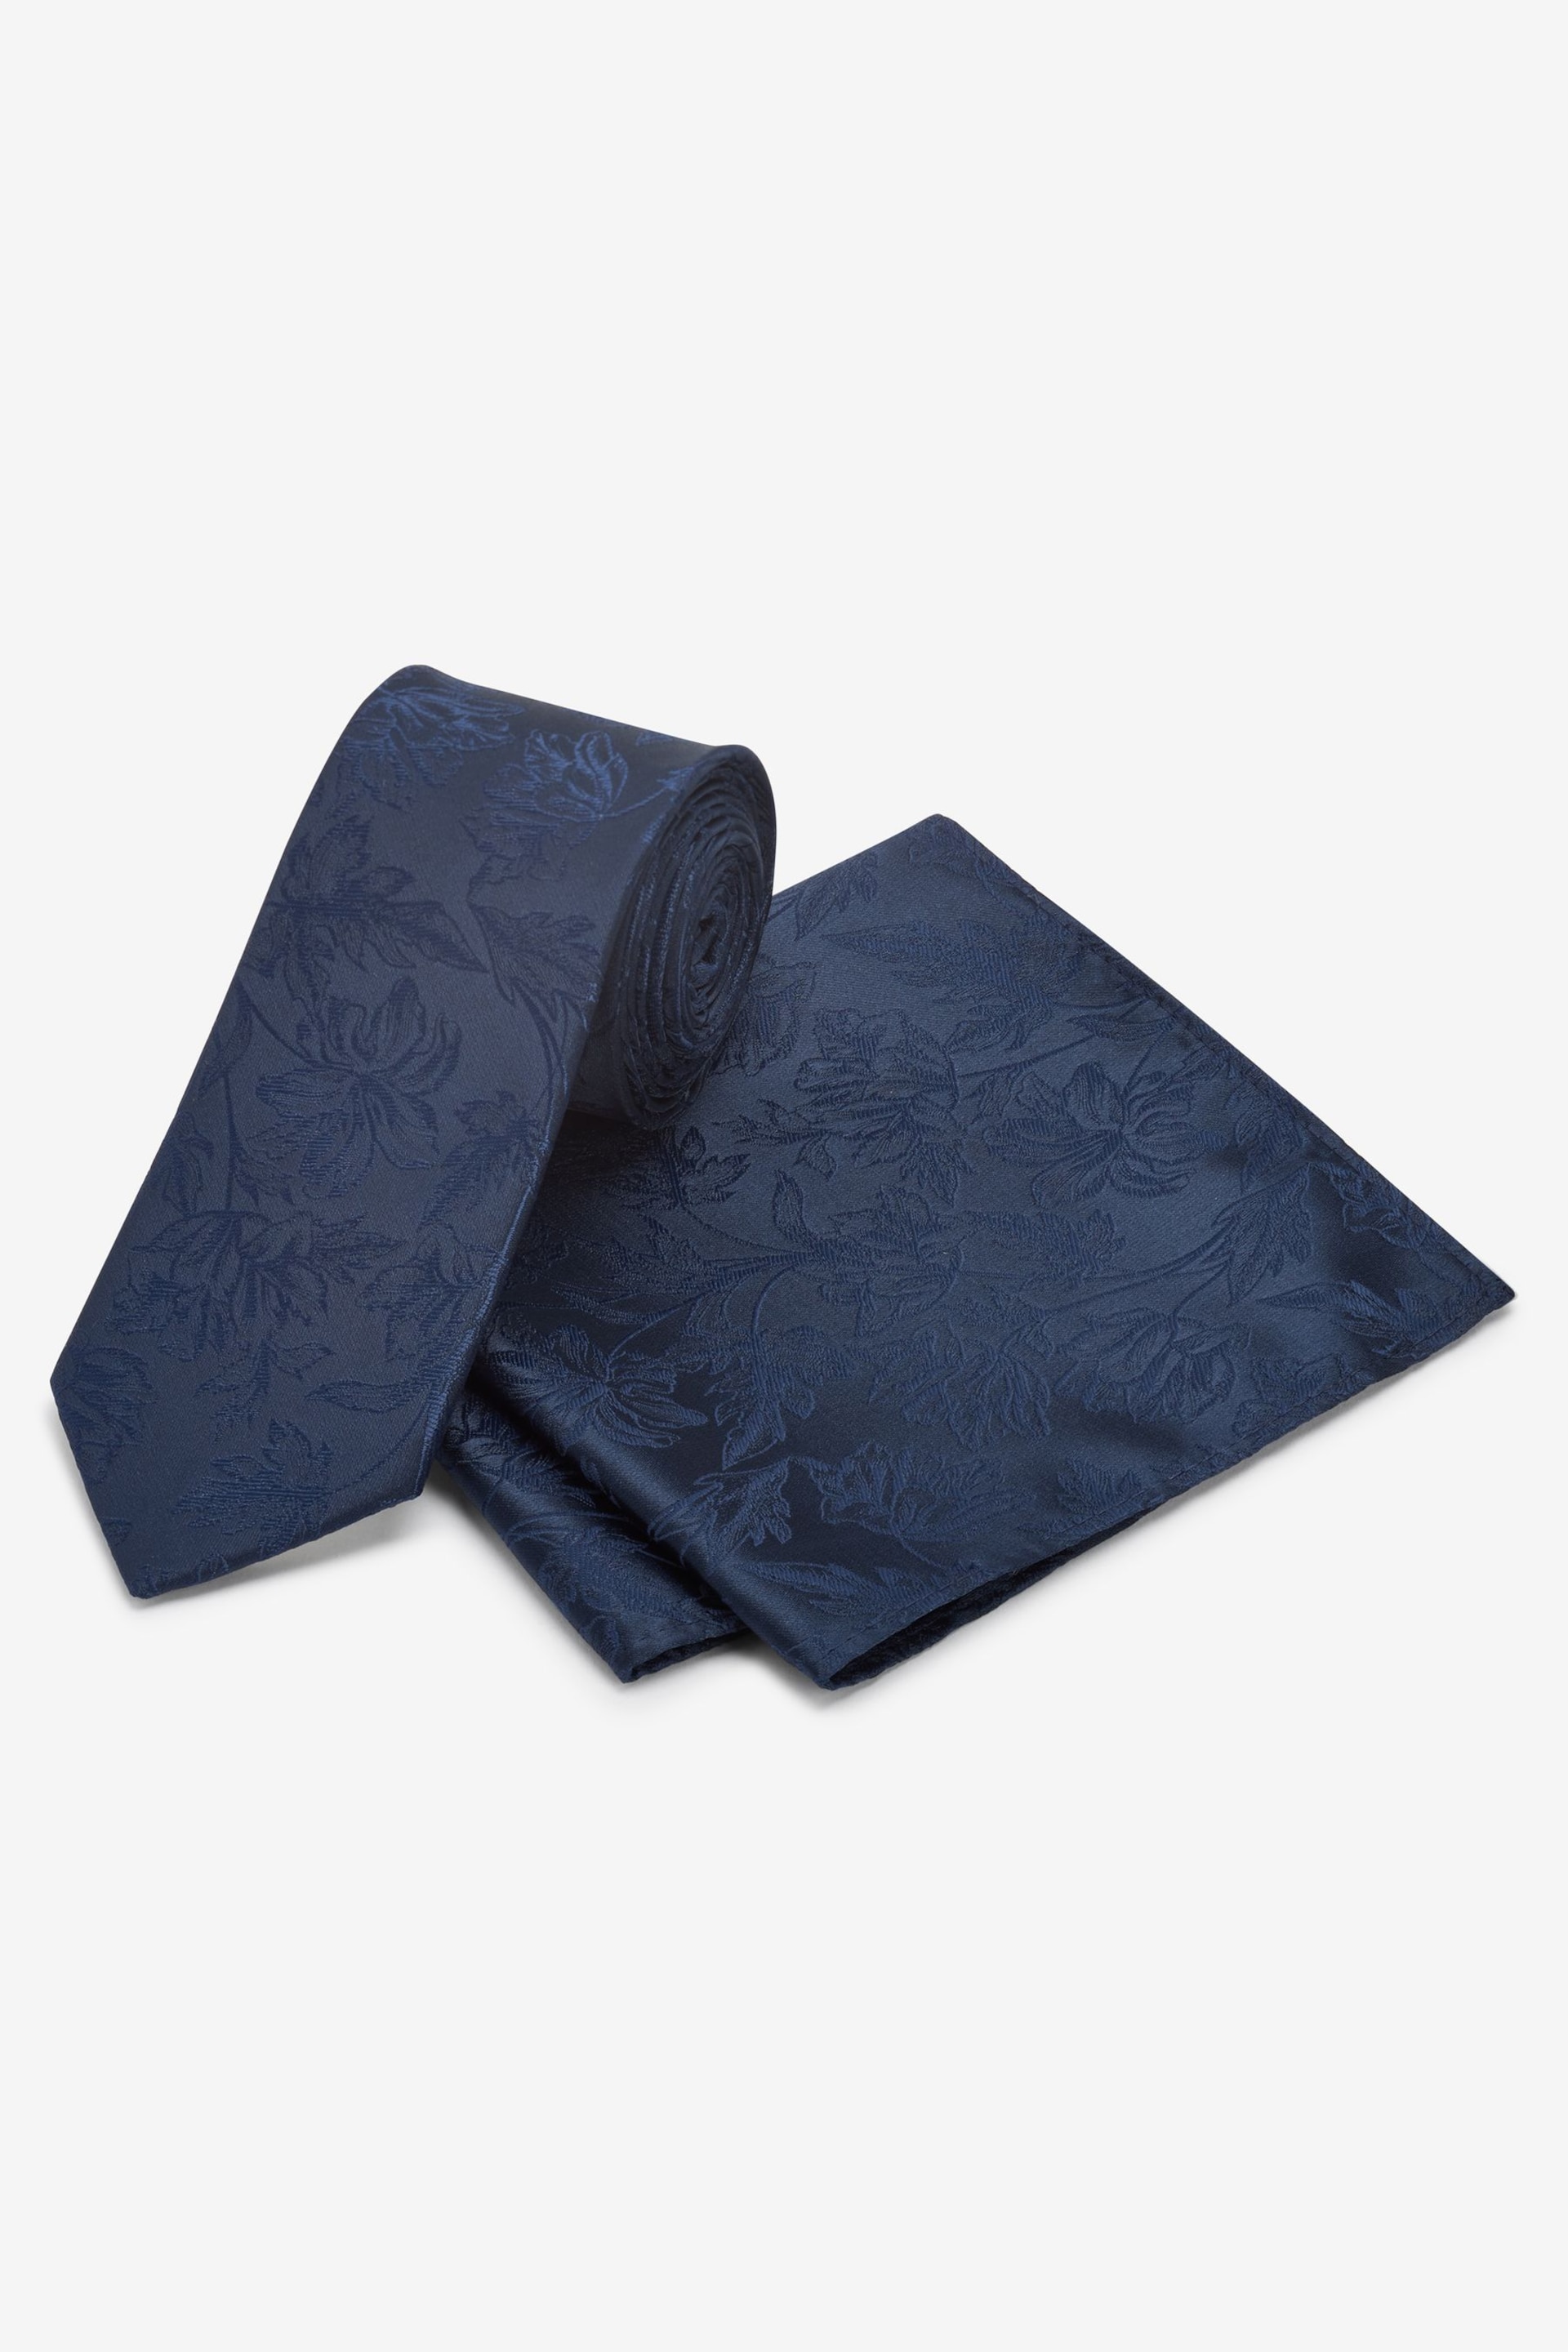 Navy Blue Floral Slim Tie And Pocket Square Set - Image 1 of 4